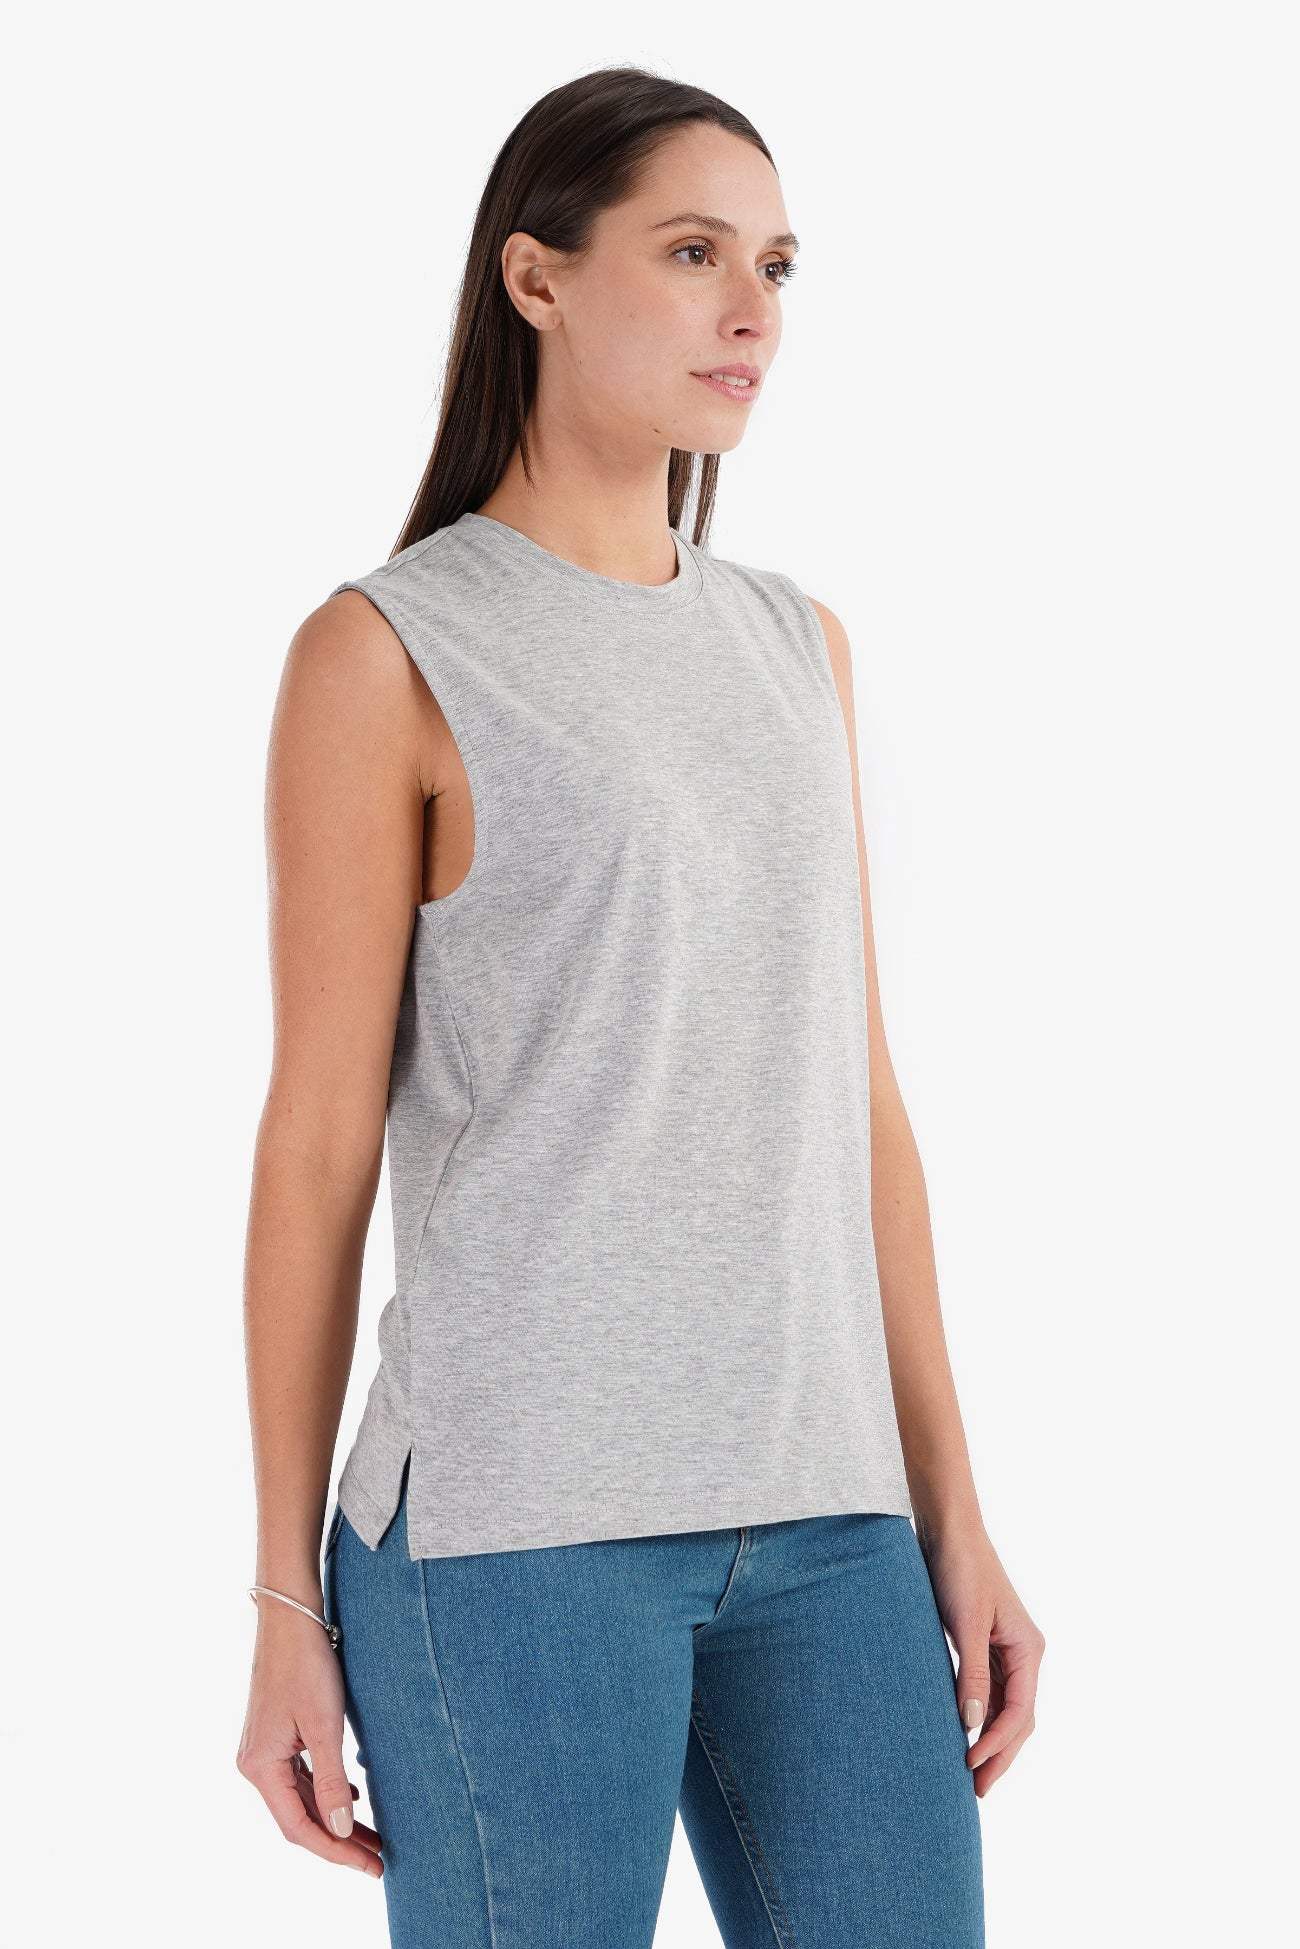 Cotton Soft Sleeveless T-Shirt - Carina - كارينا